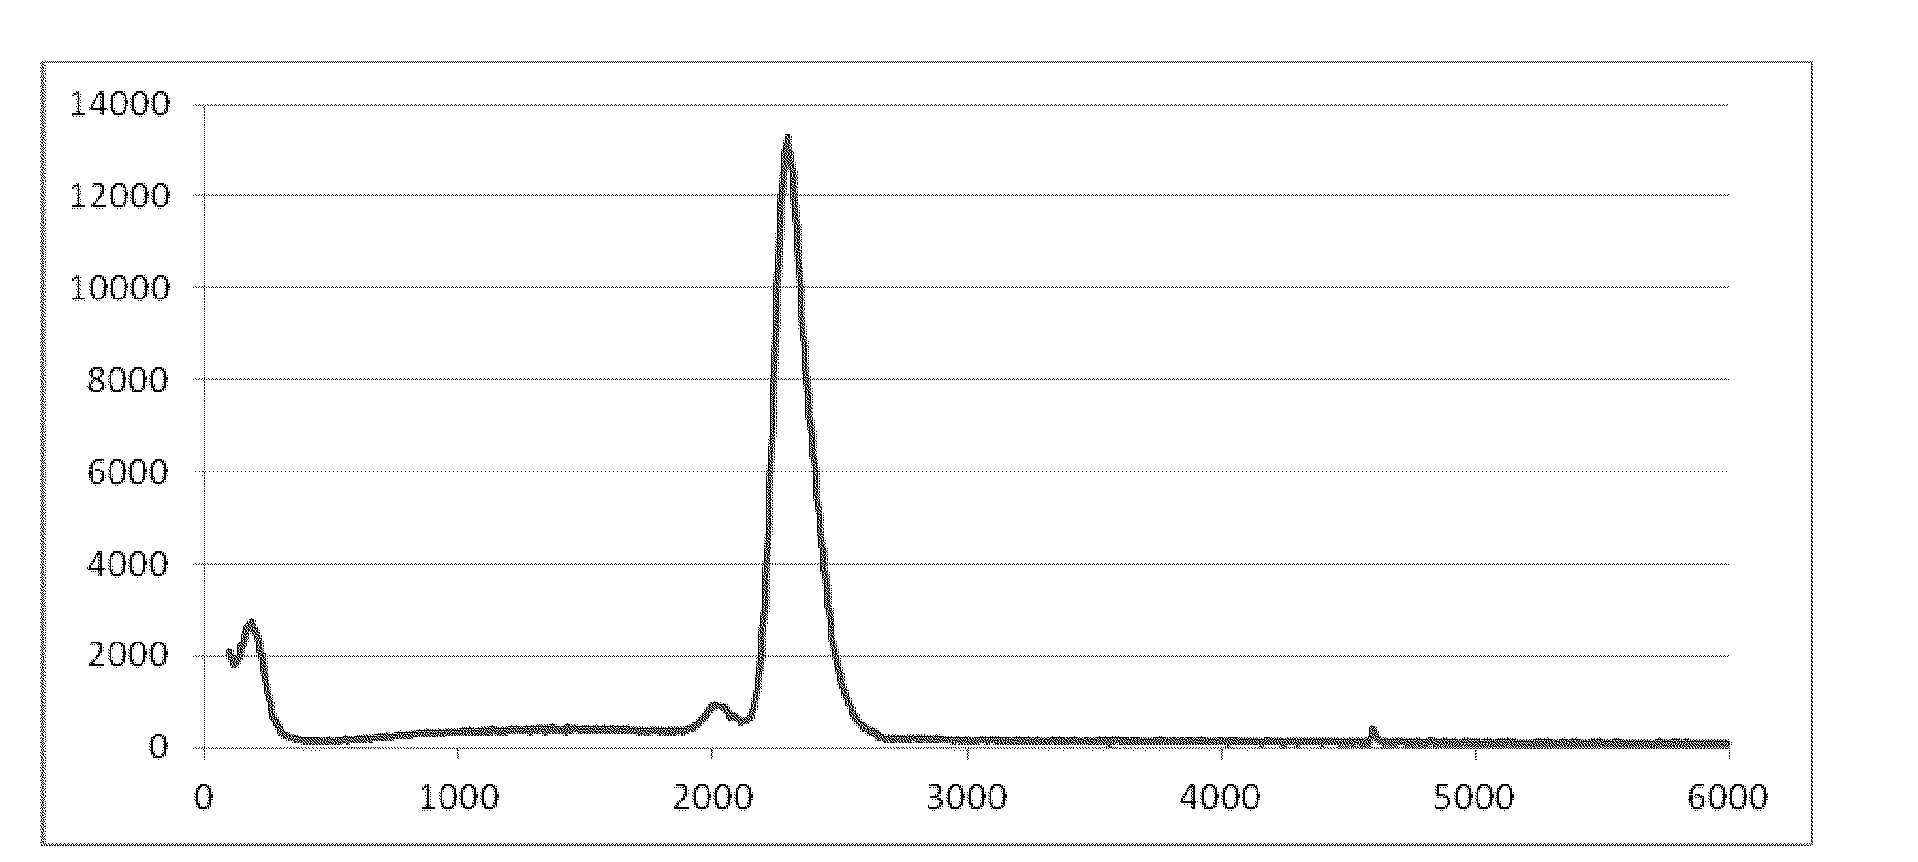 Spectroscopy technique using merged spectral data